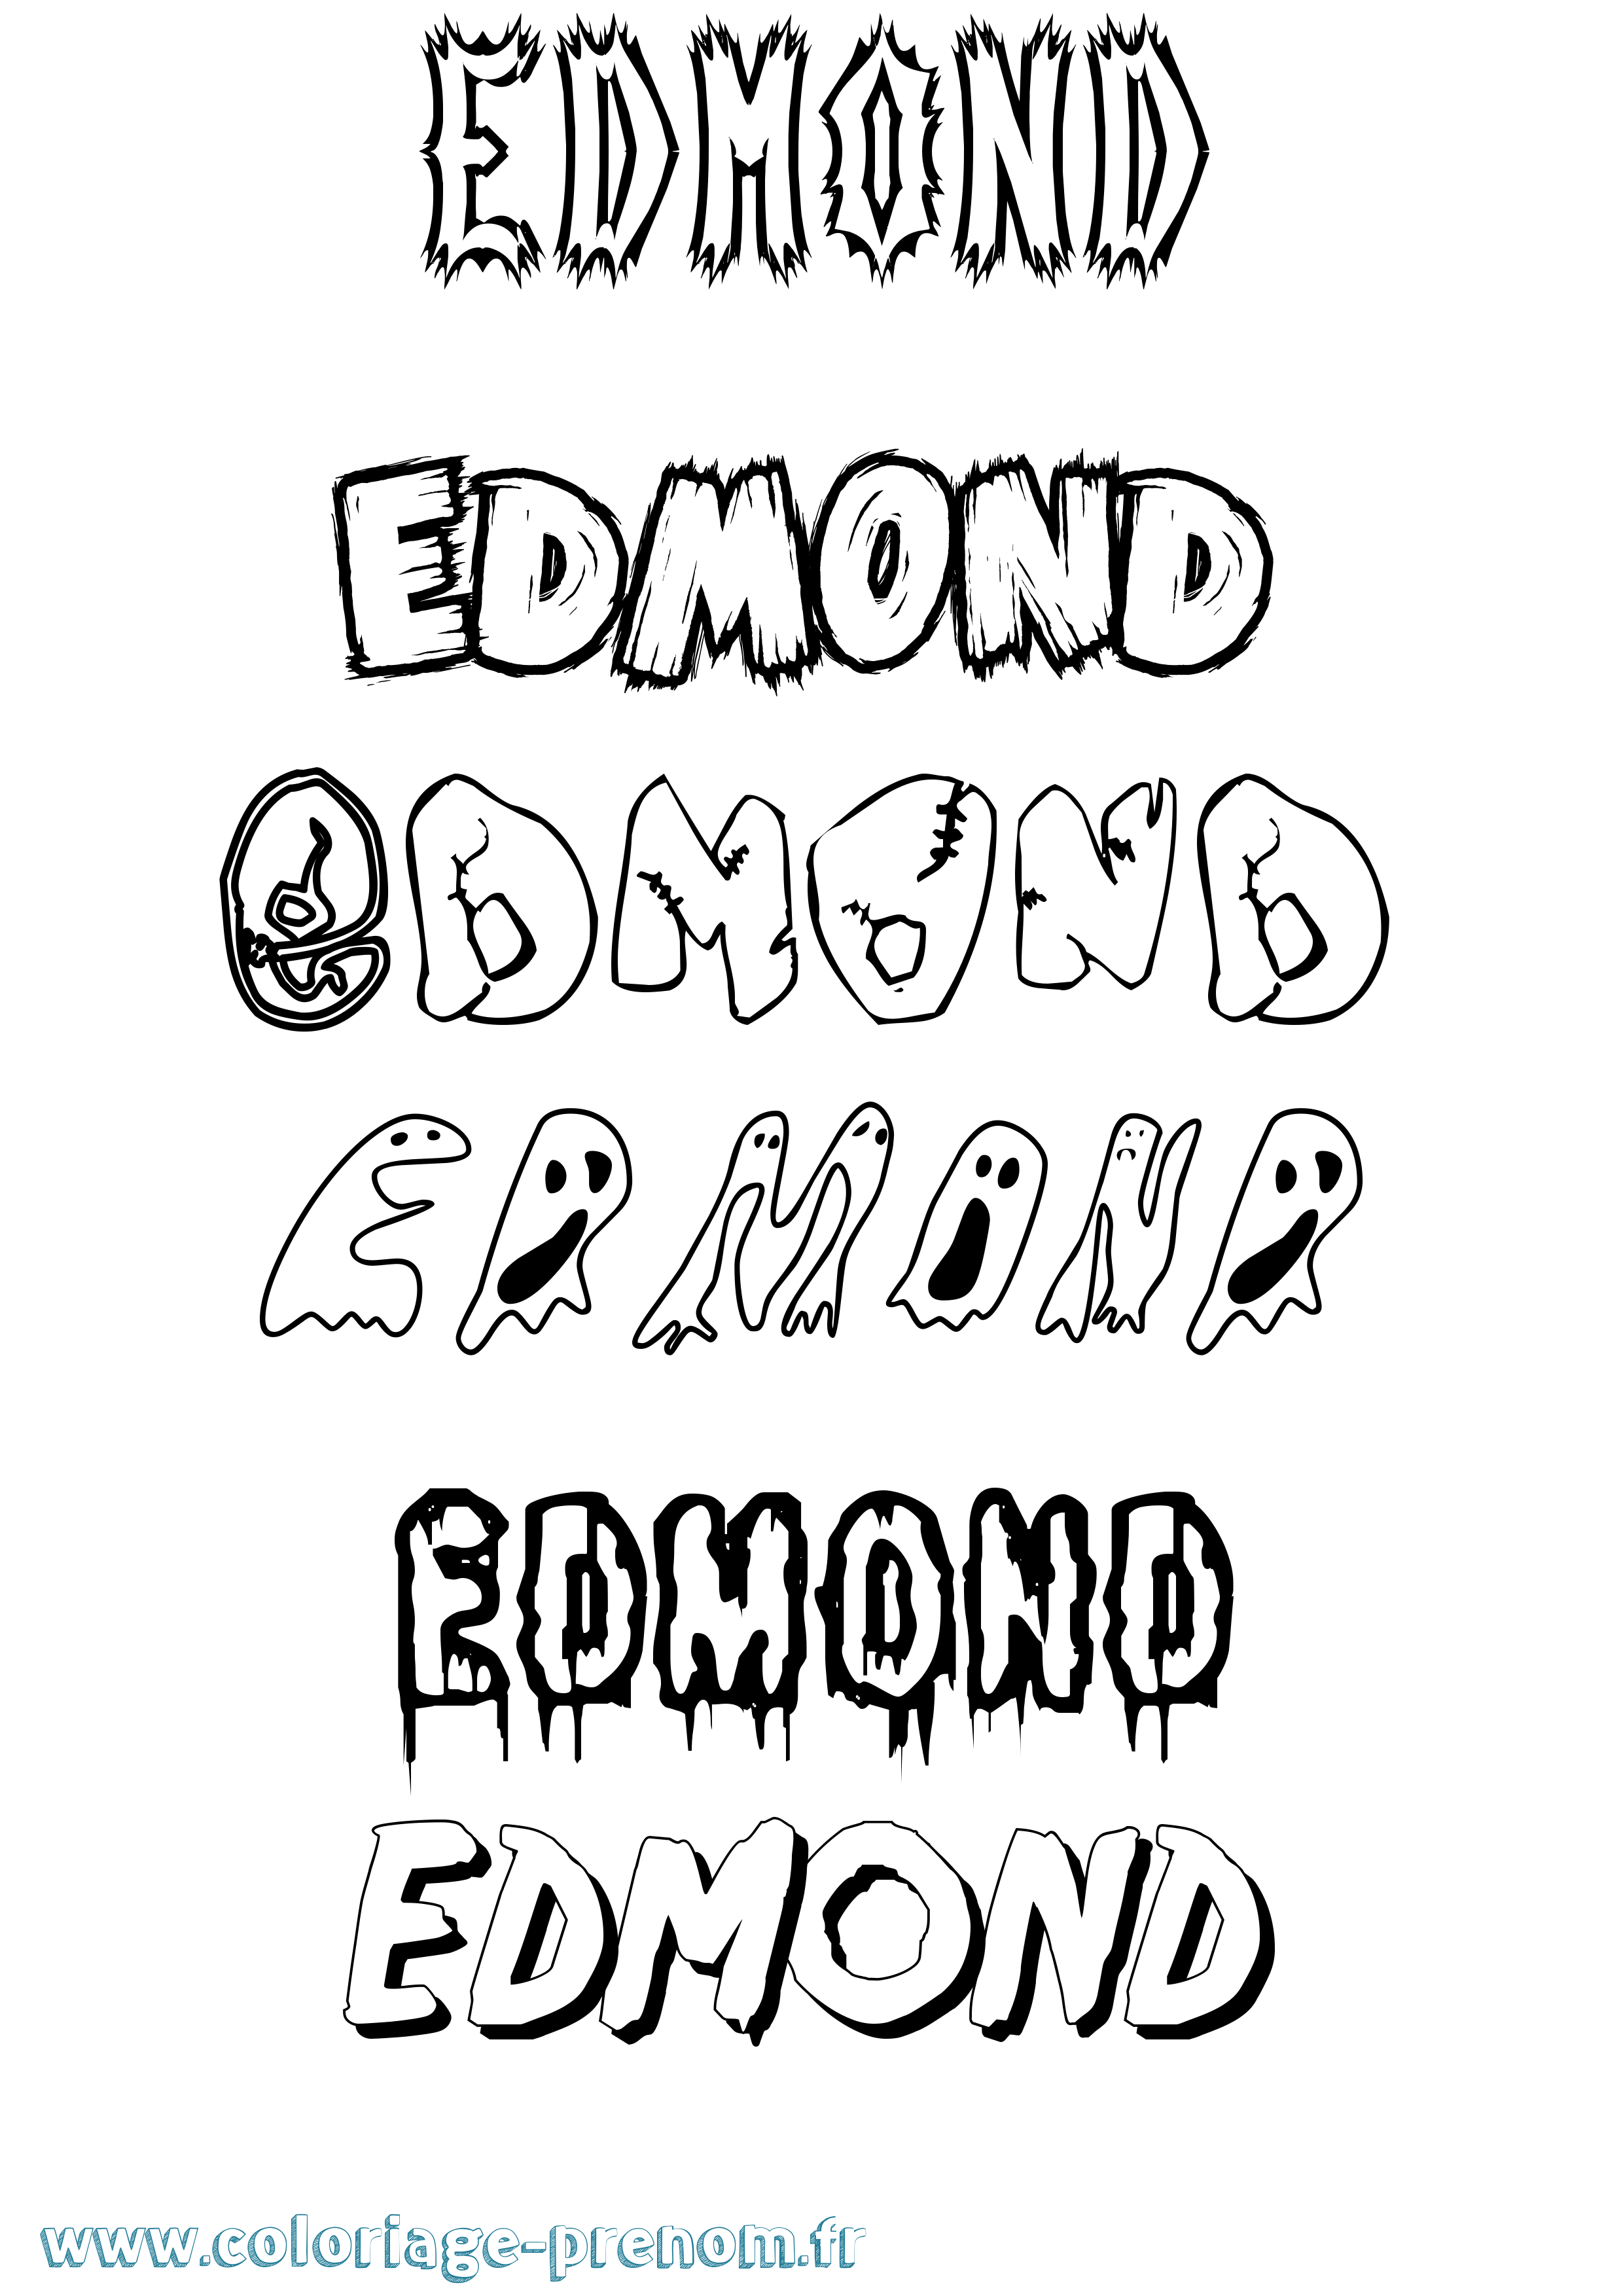 Coloriage prénom Edmond Frisson